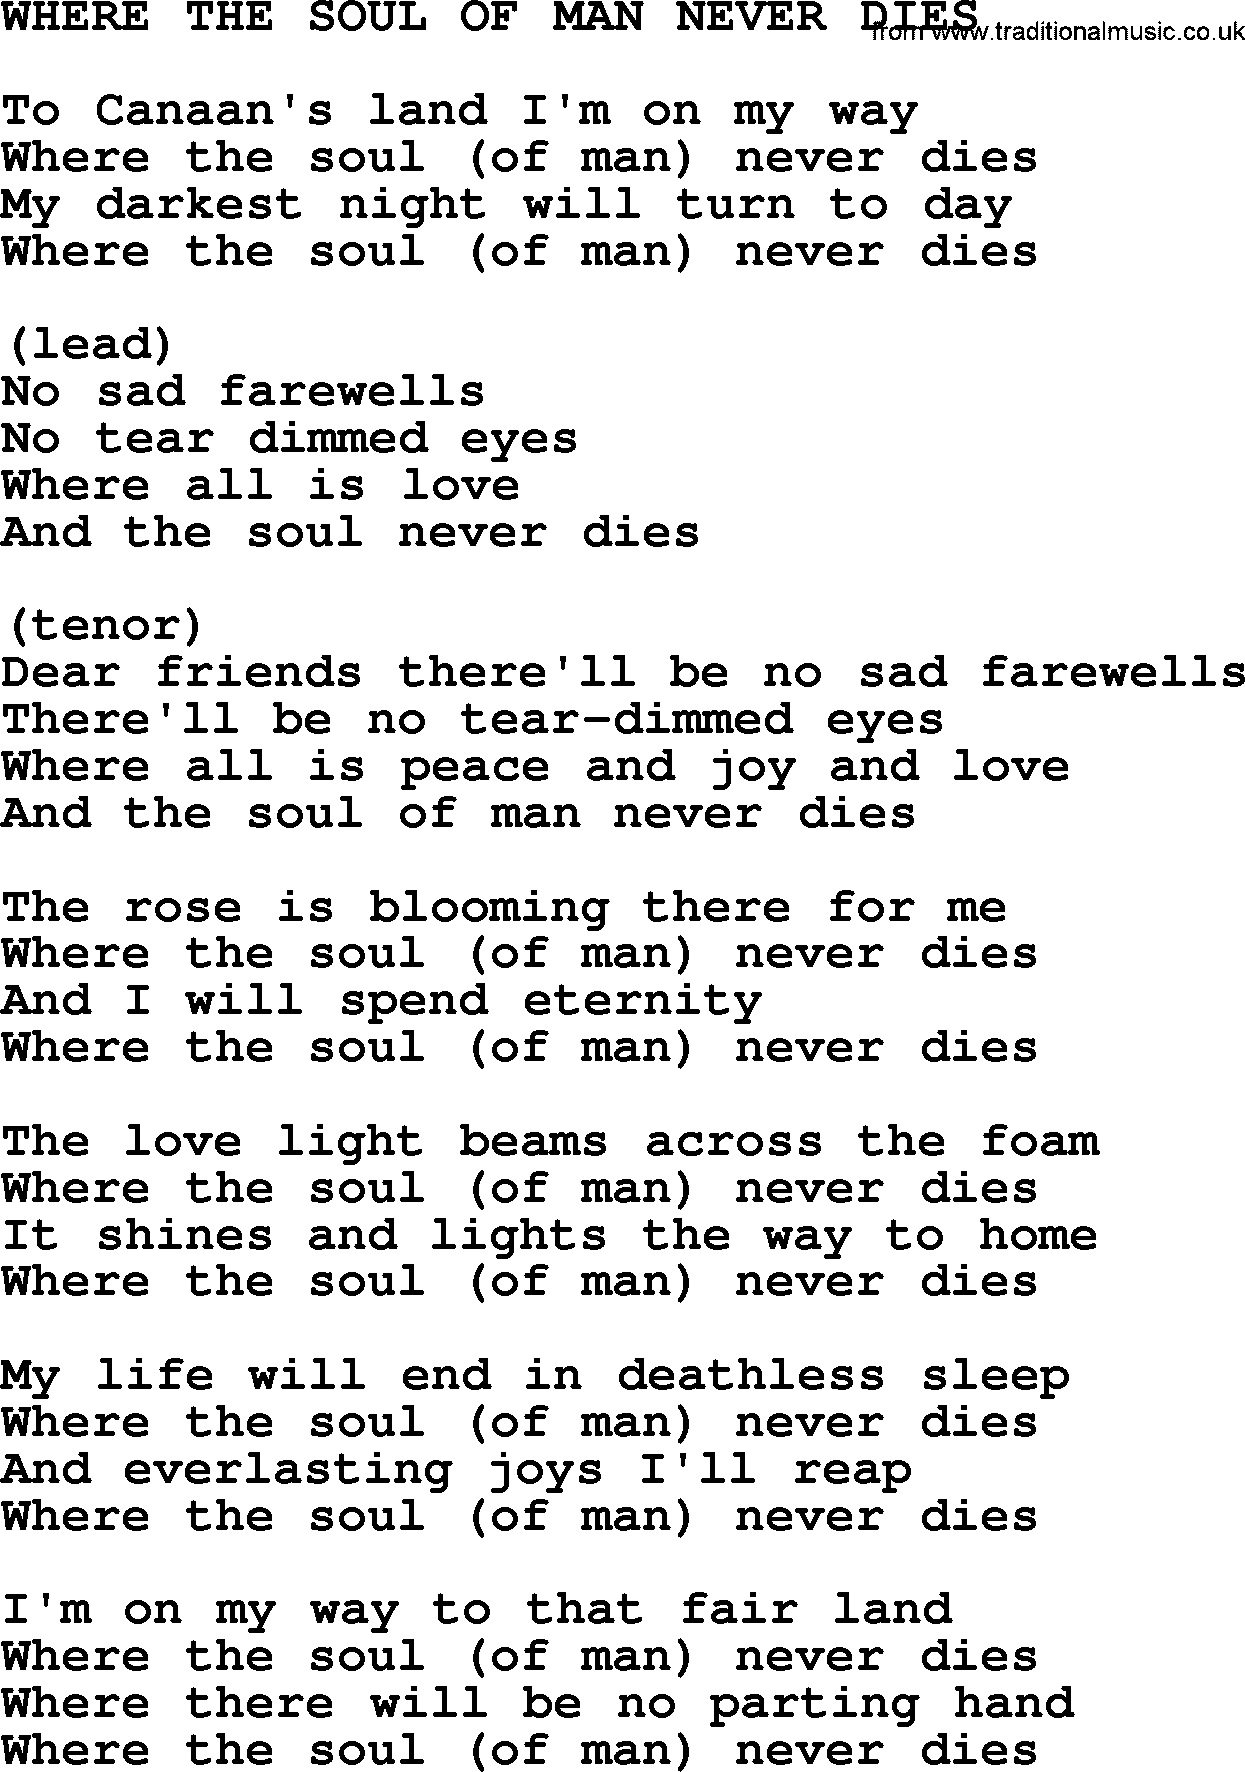 Johnny Cash song Where The Soul Of Man Never Dies.txt lyrics